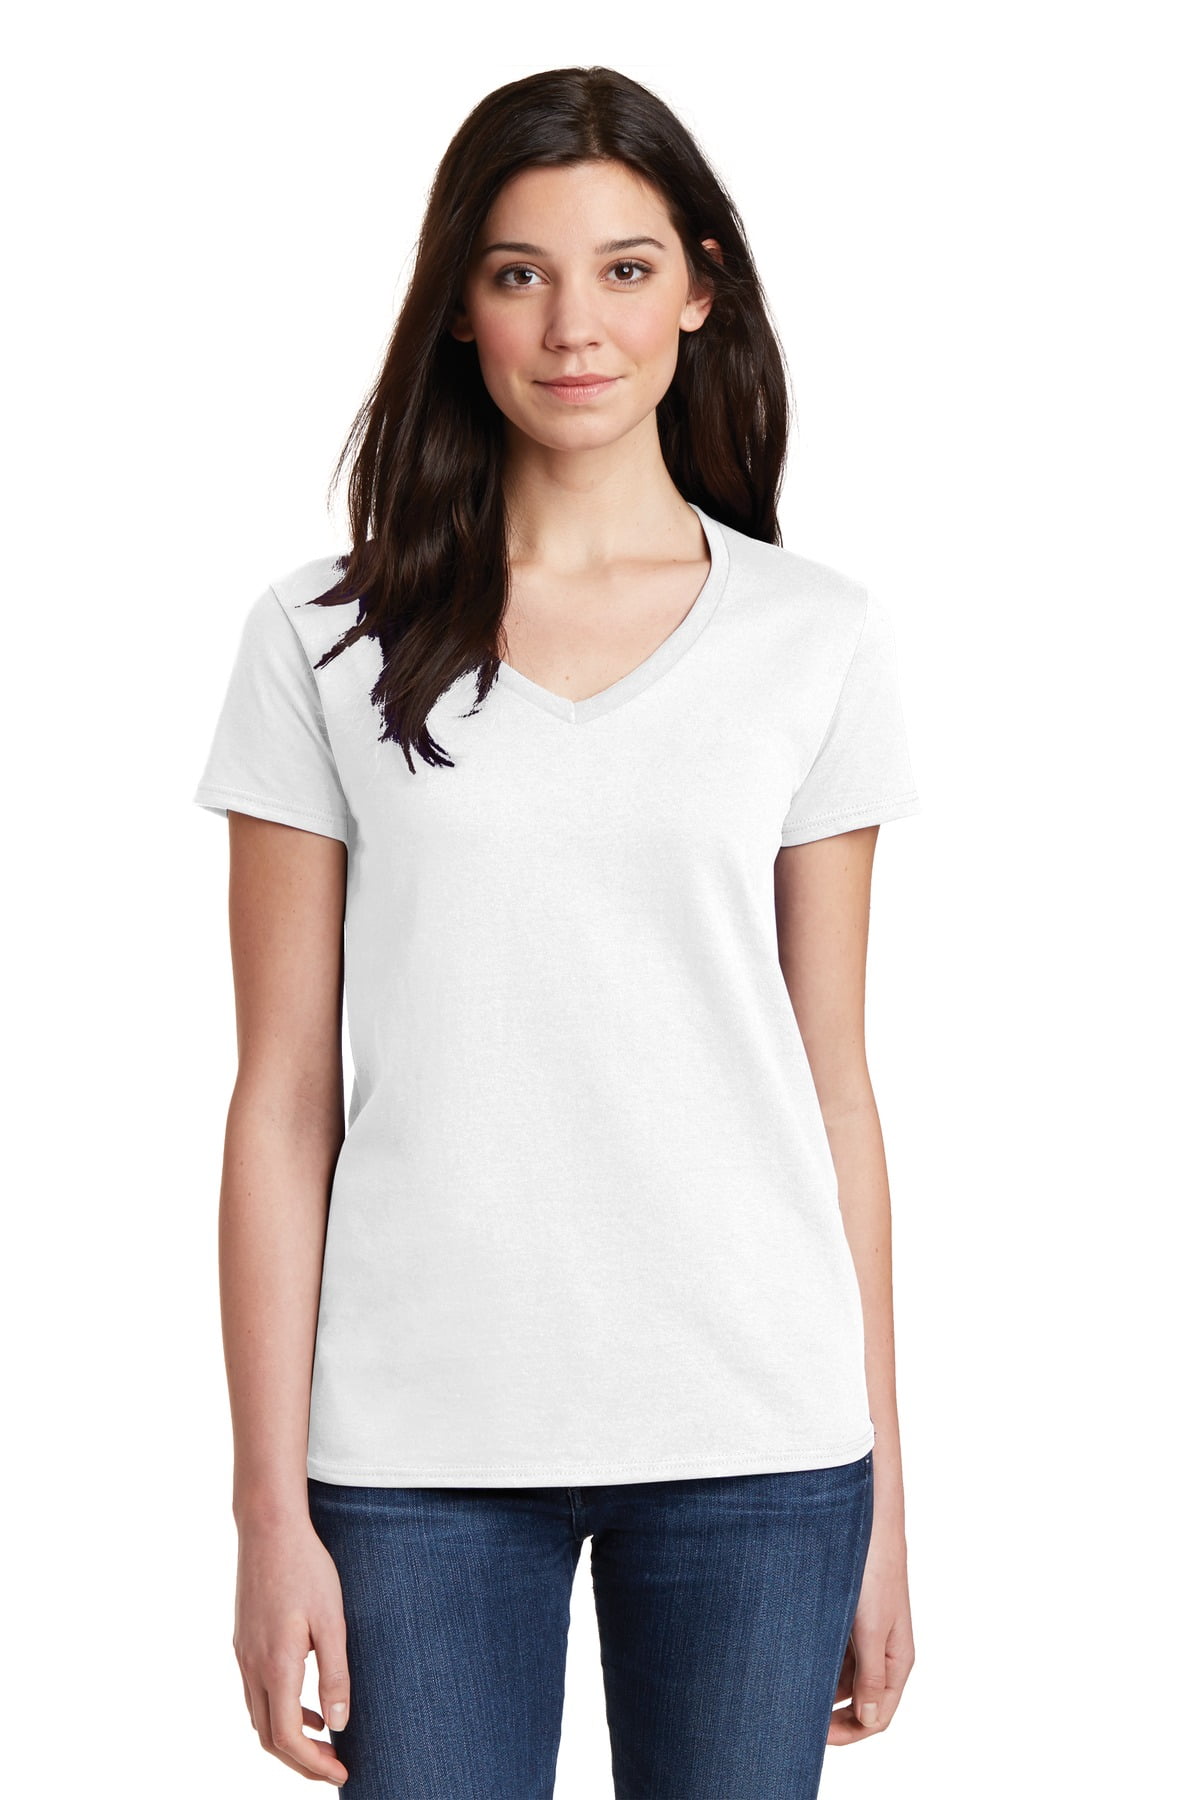 New Gildan Ladies Short Sleeve T-Shirt Top Smart Casual Cotton Size Womans Tee 